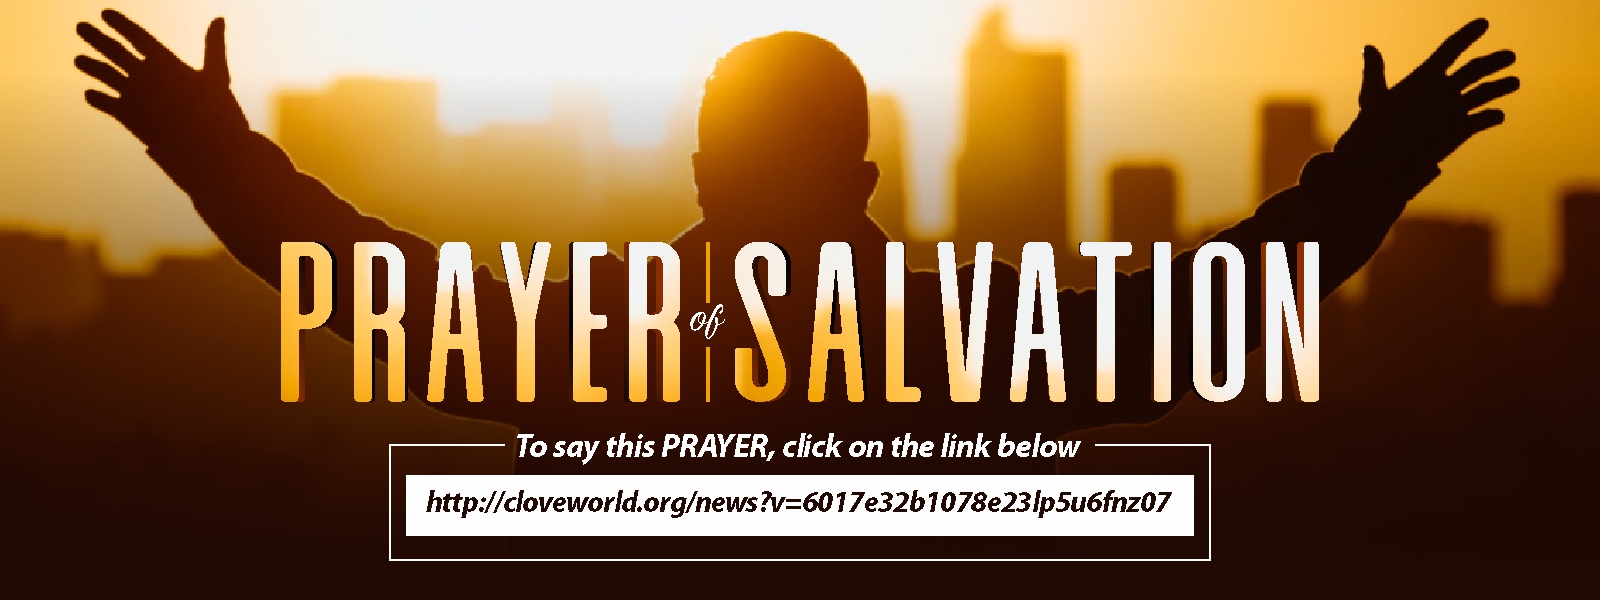 PRAYER OF SALVATION